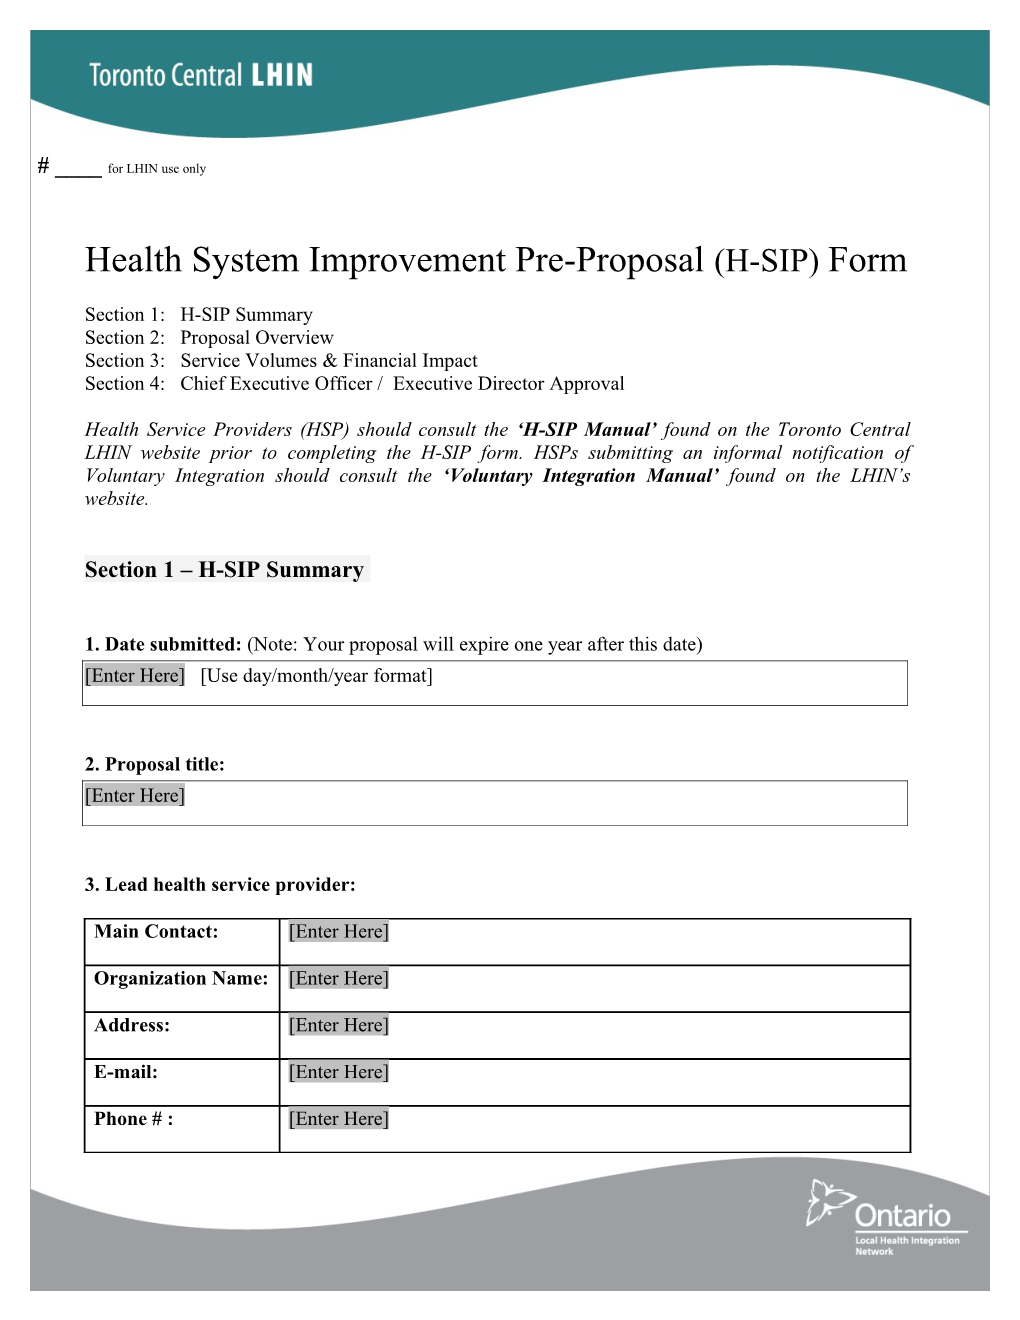 Health System Improvement Pre-Proposal Form